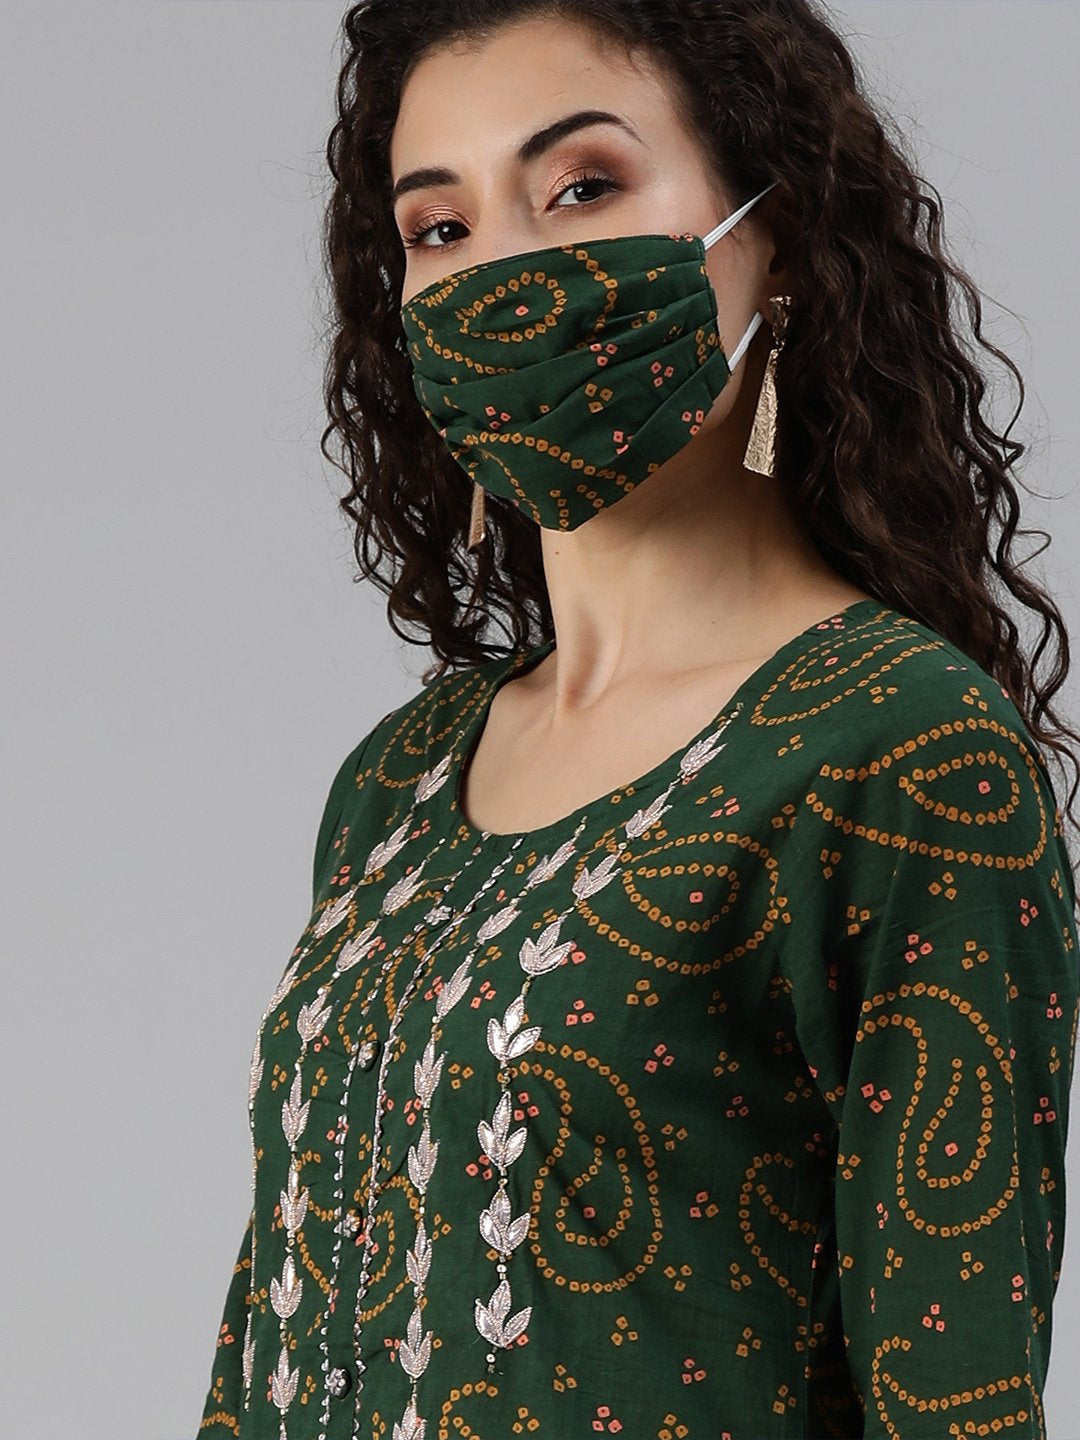 Ishin Women's Green Yoke Design Bandhani A-Line Kurta